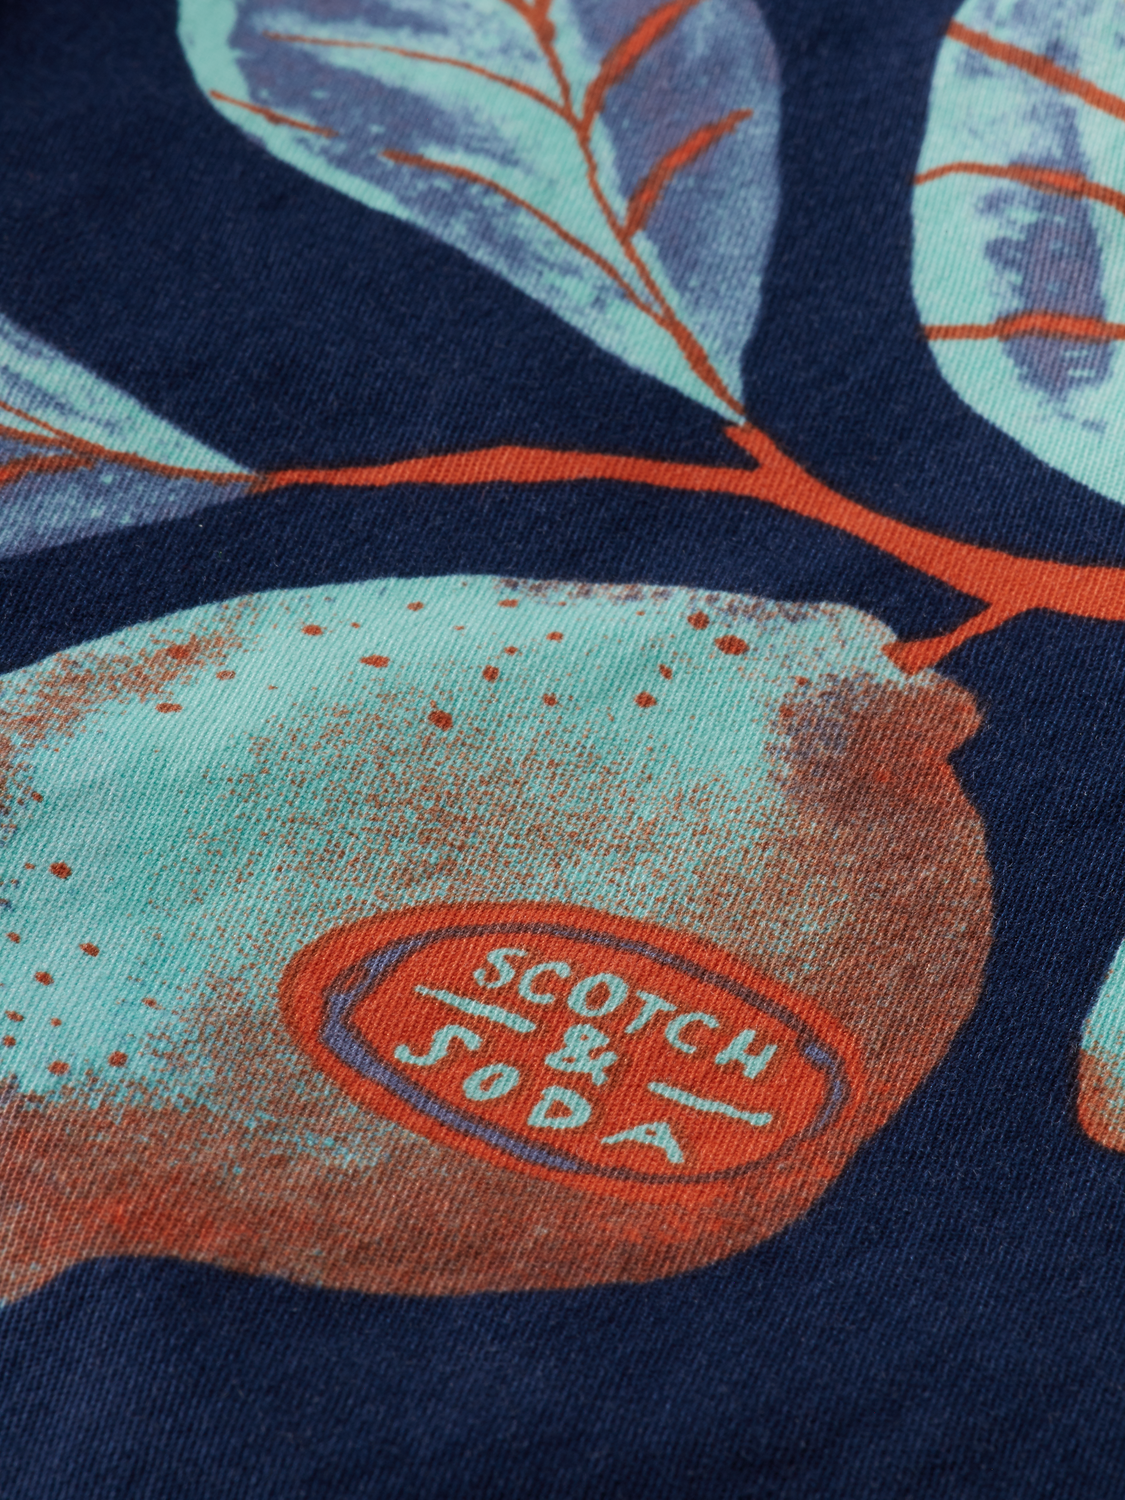 Scotch & Soda - Stuart - Printed Chino Shorts - Navy Fruits